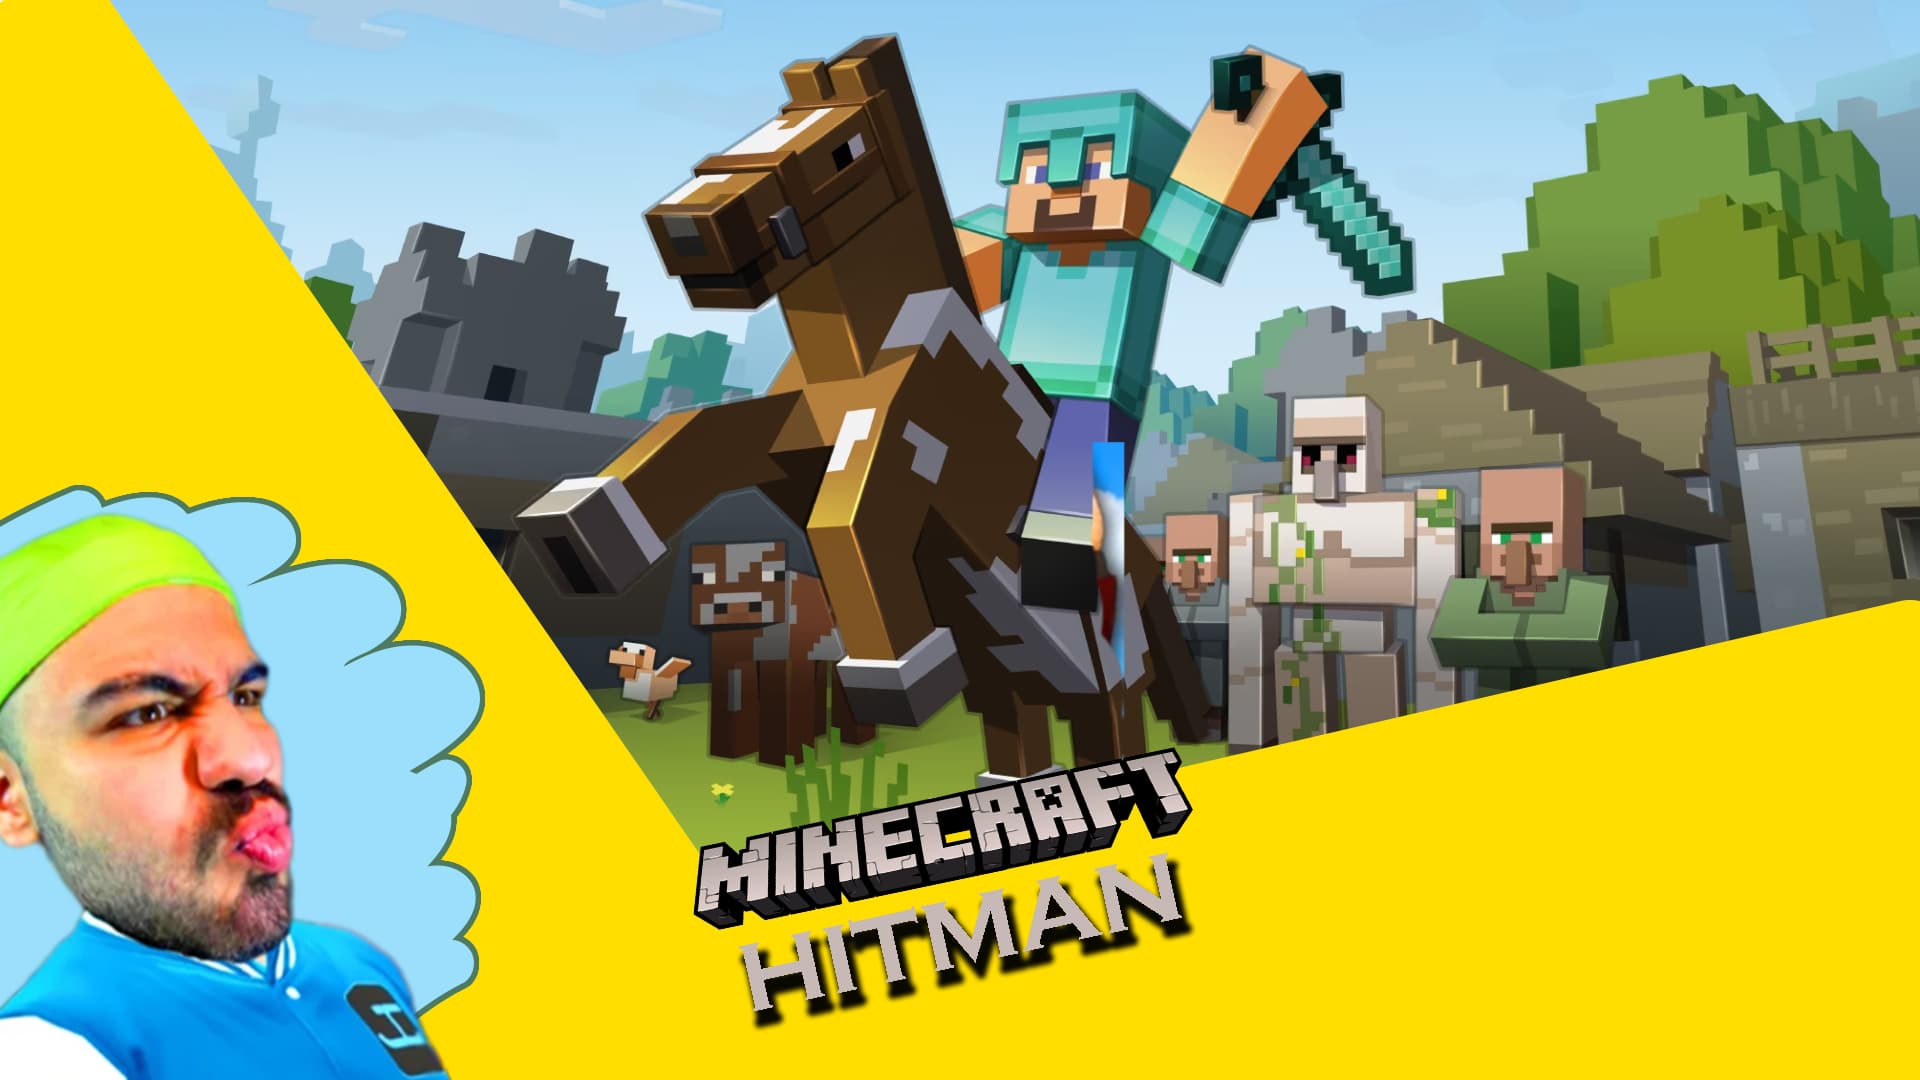 Minecraft / Hitman